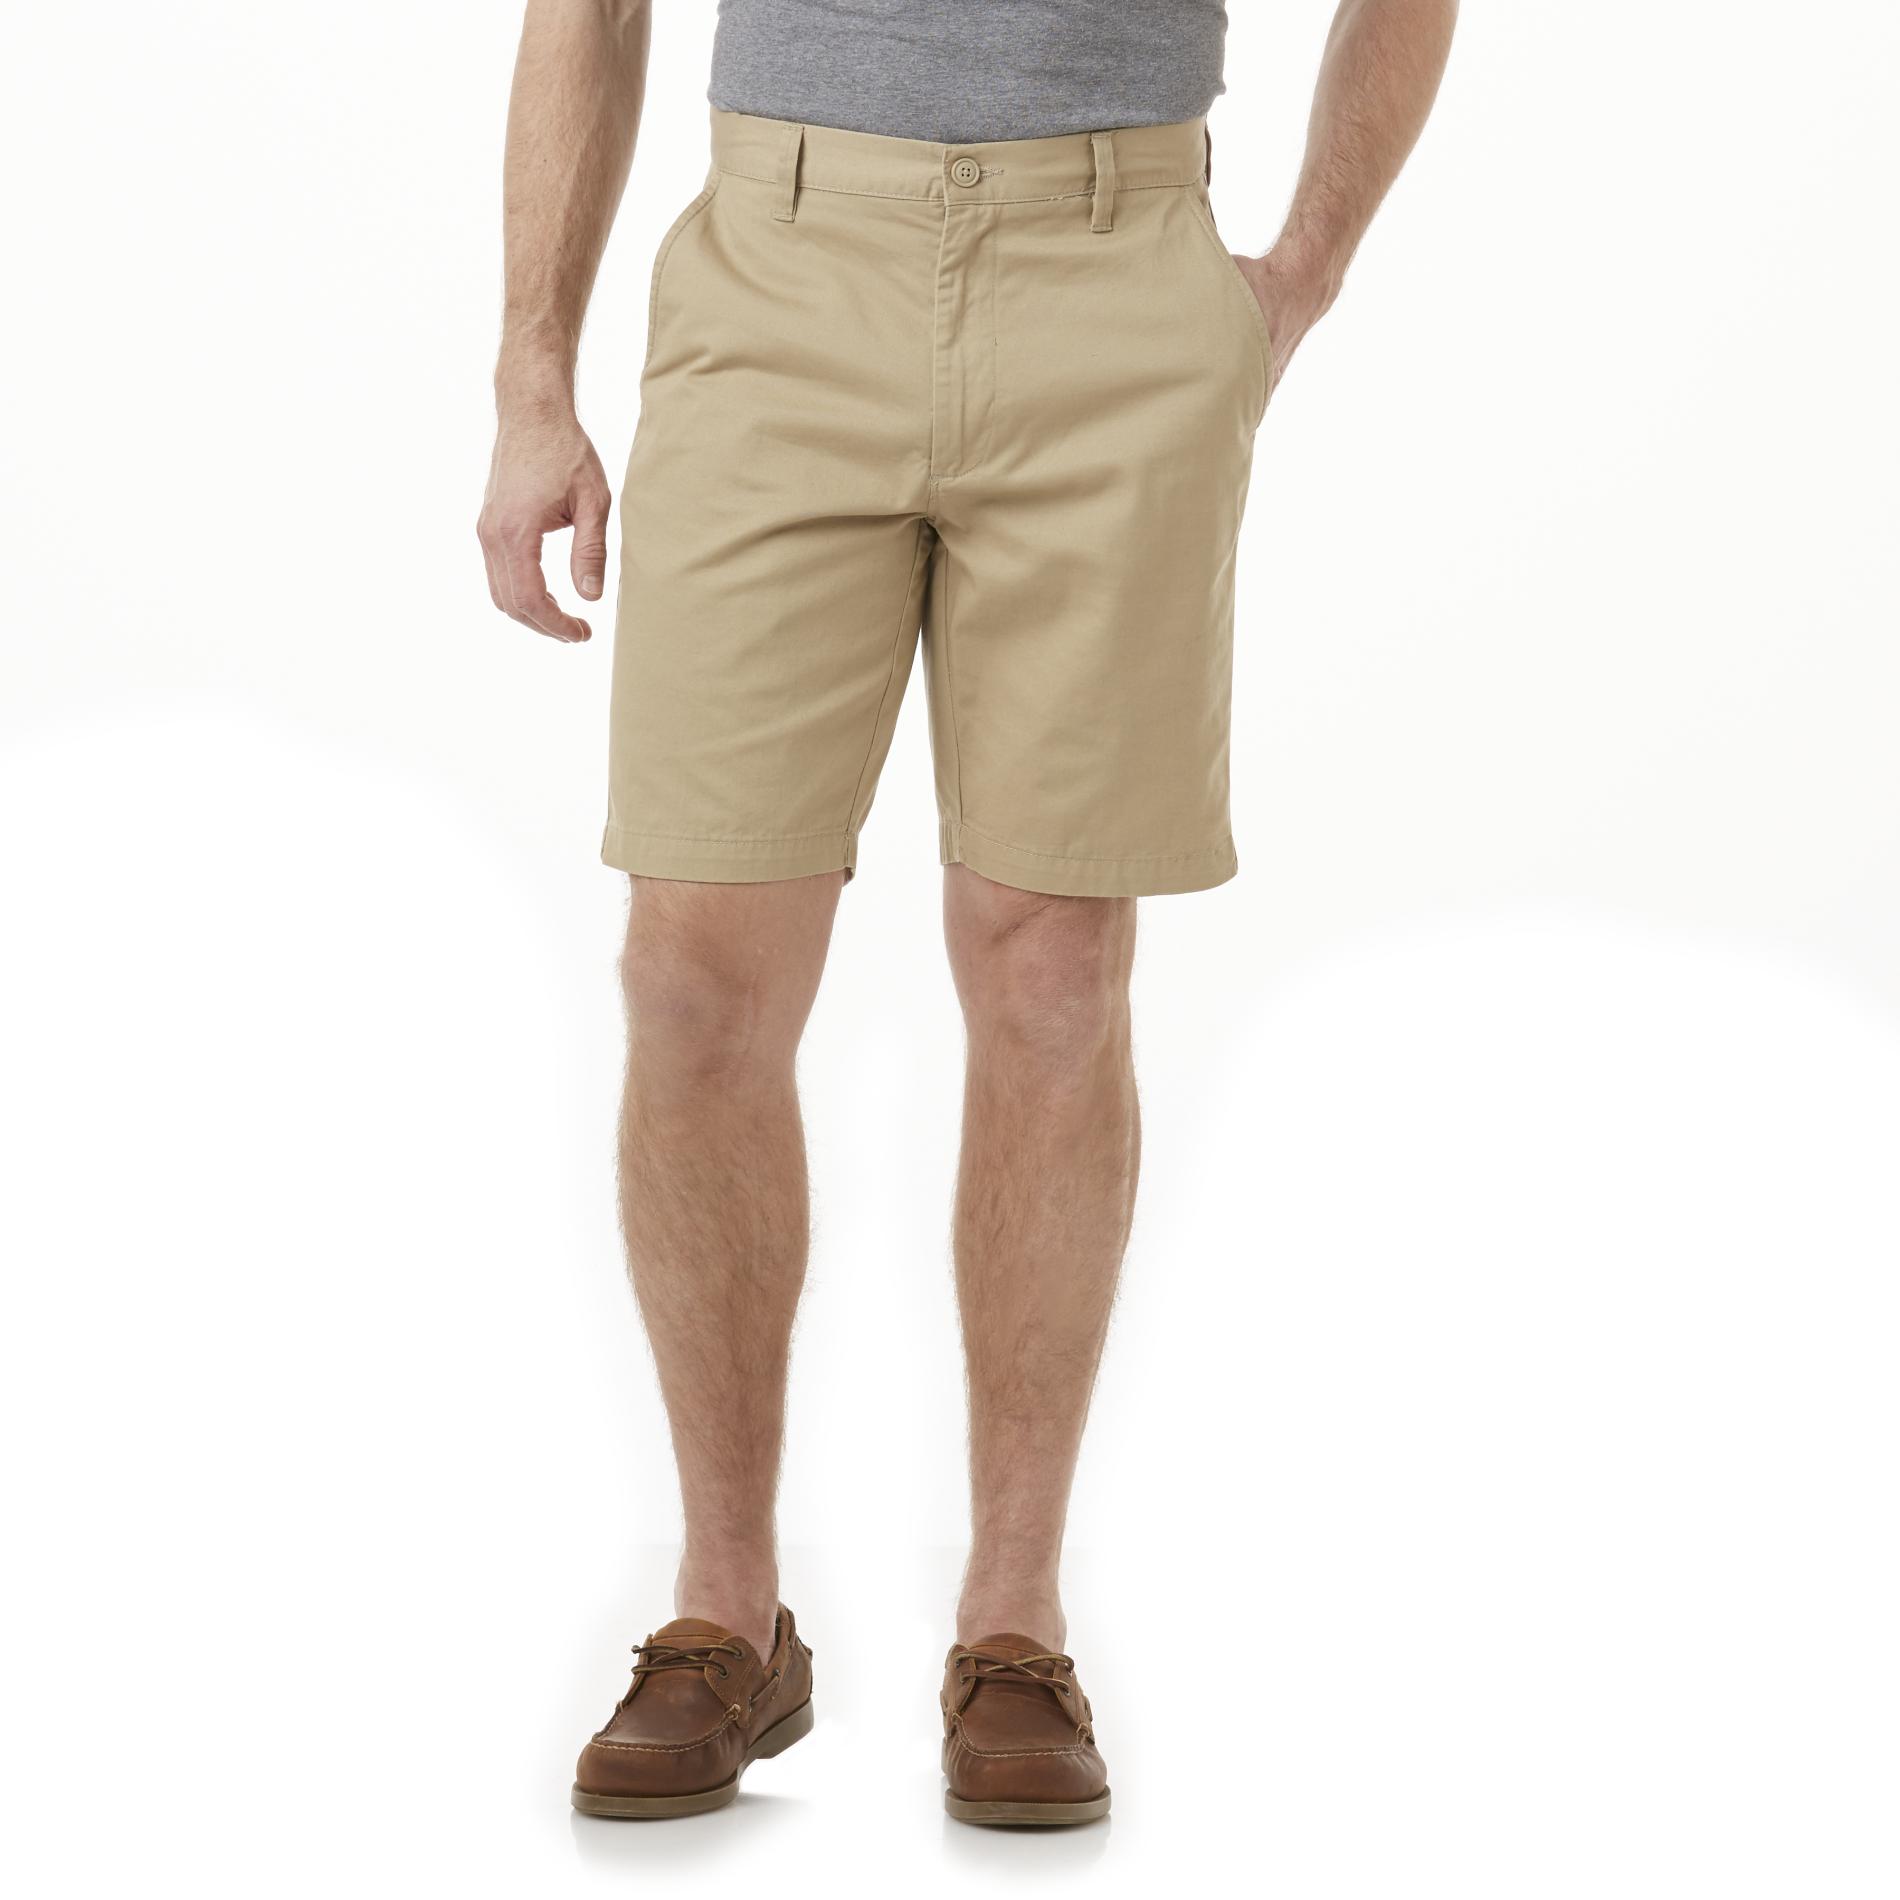 Basic Editions Men's Flat Front Shorts